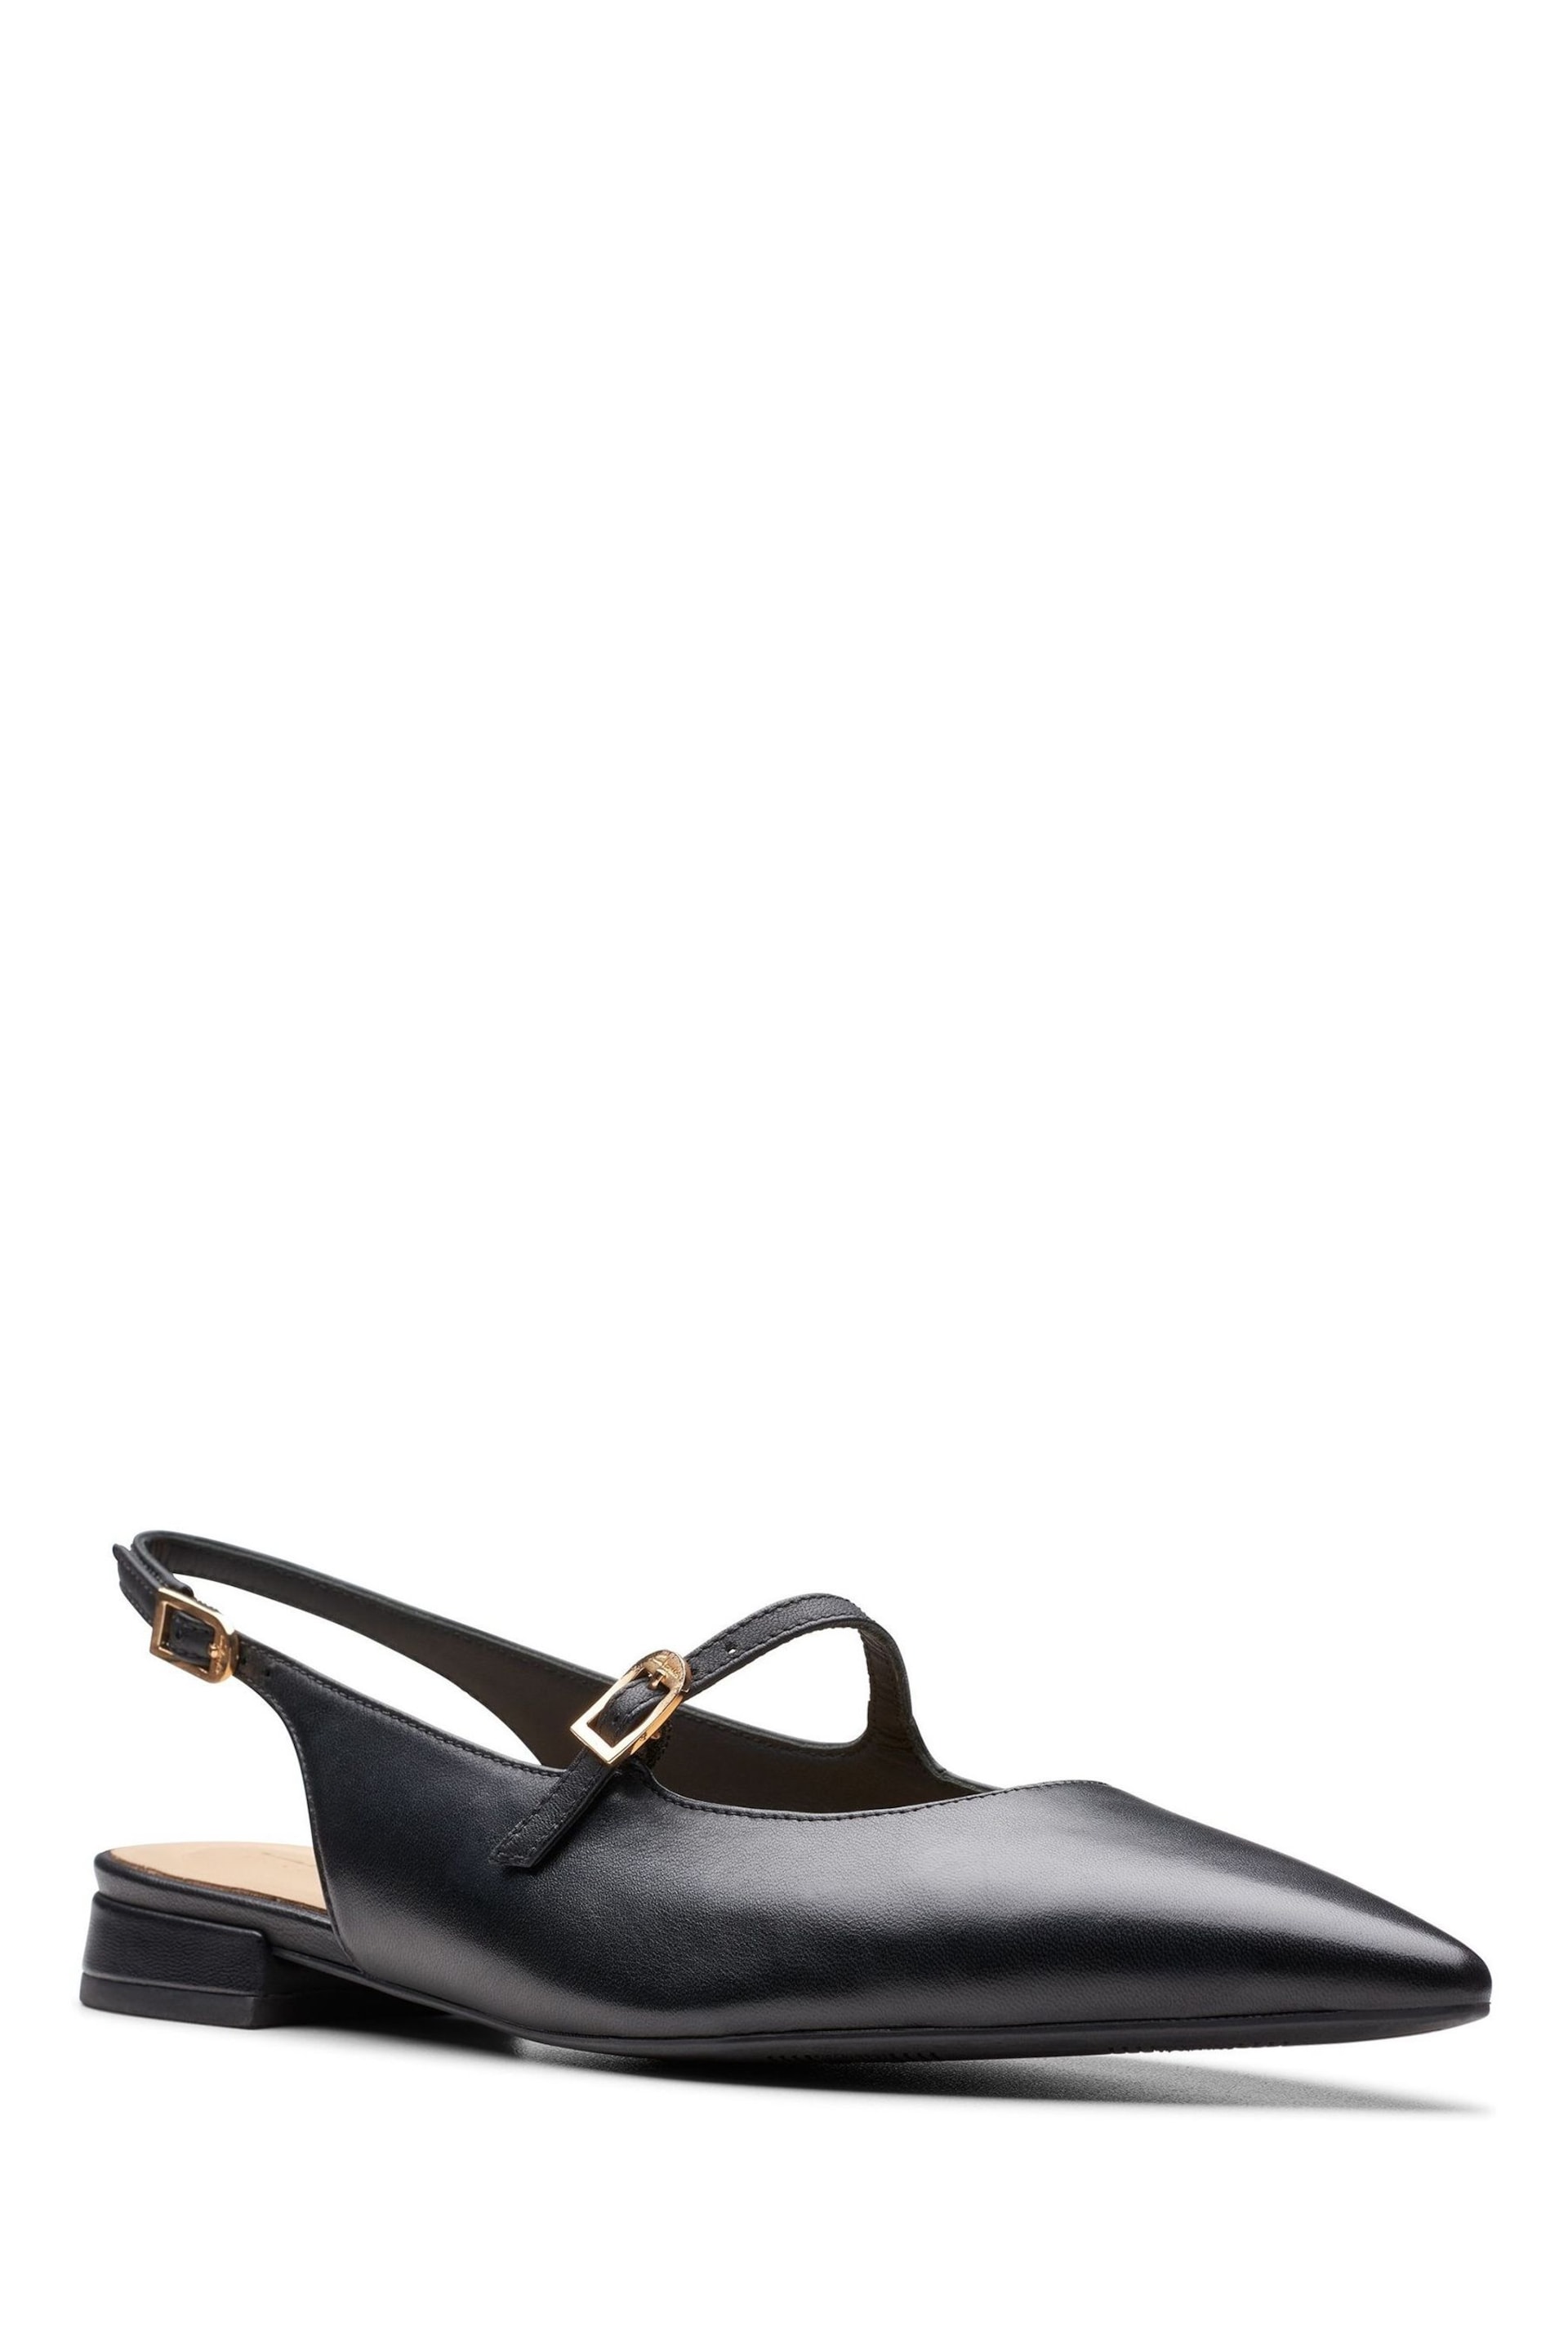 Clarks Black Leather Sensa 15 Sligback Shoes - Image 3 of 7